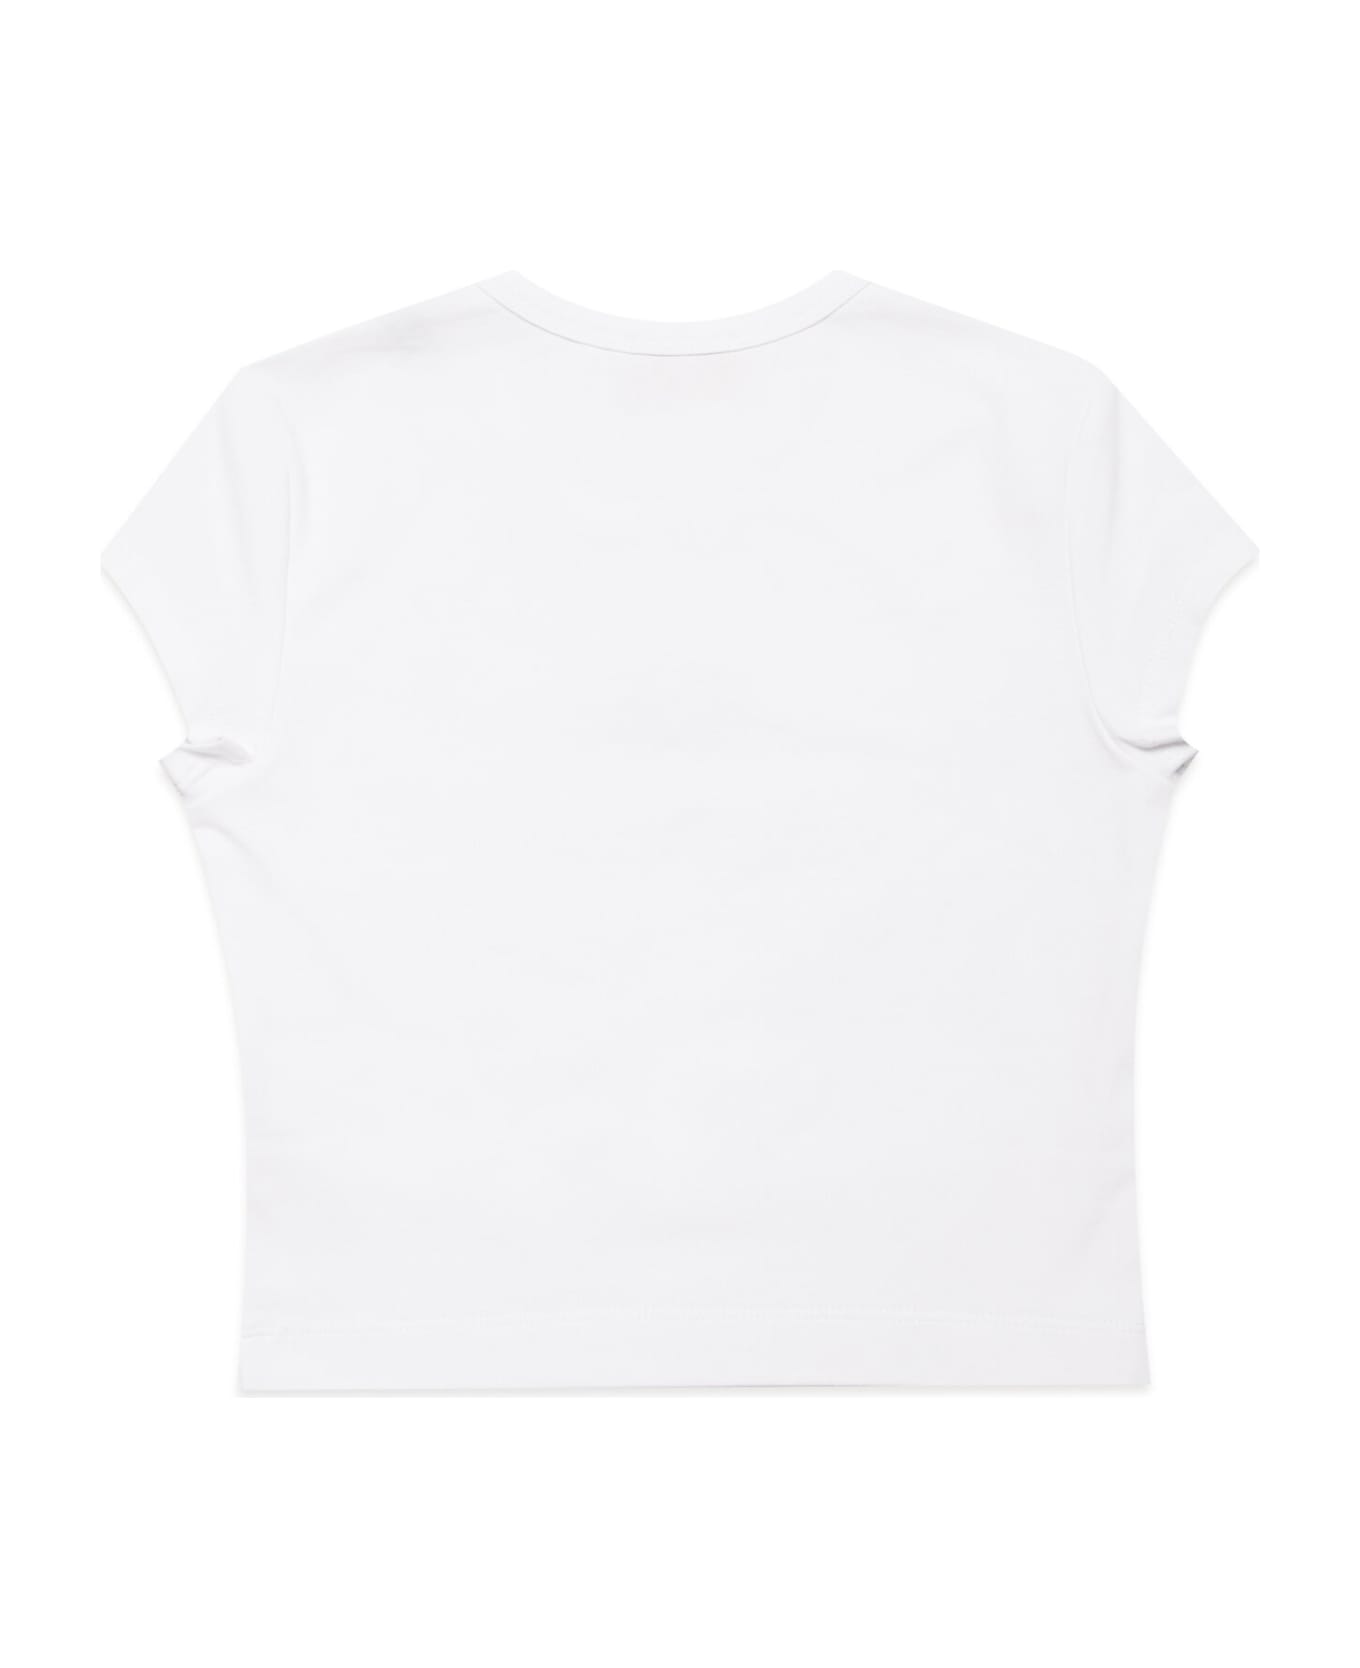 Diesel Tangie T-shirt Diesel Oval D Branded T-shirt - Bianco Tシャツ＆ポロシャツ